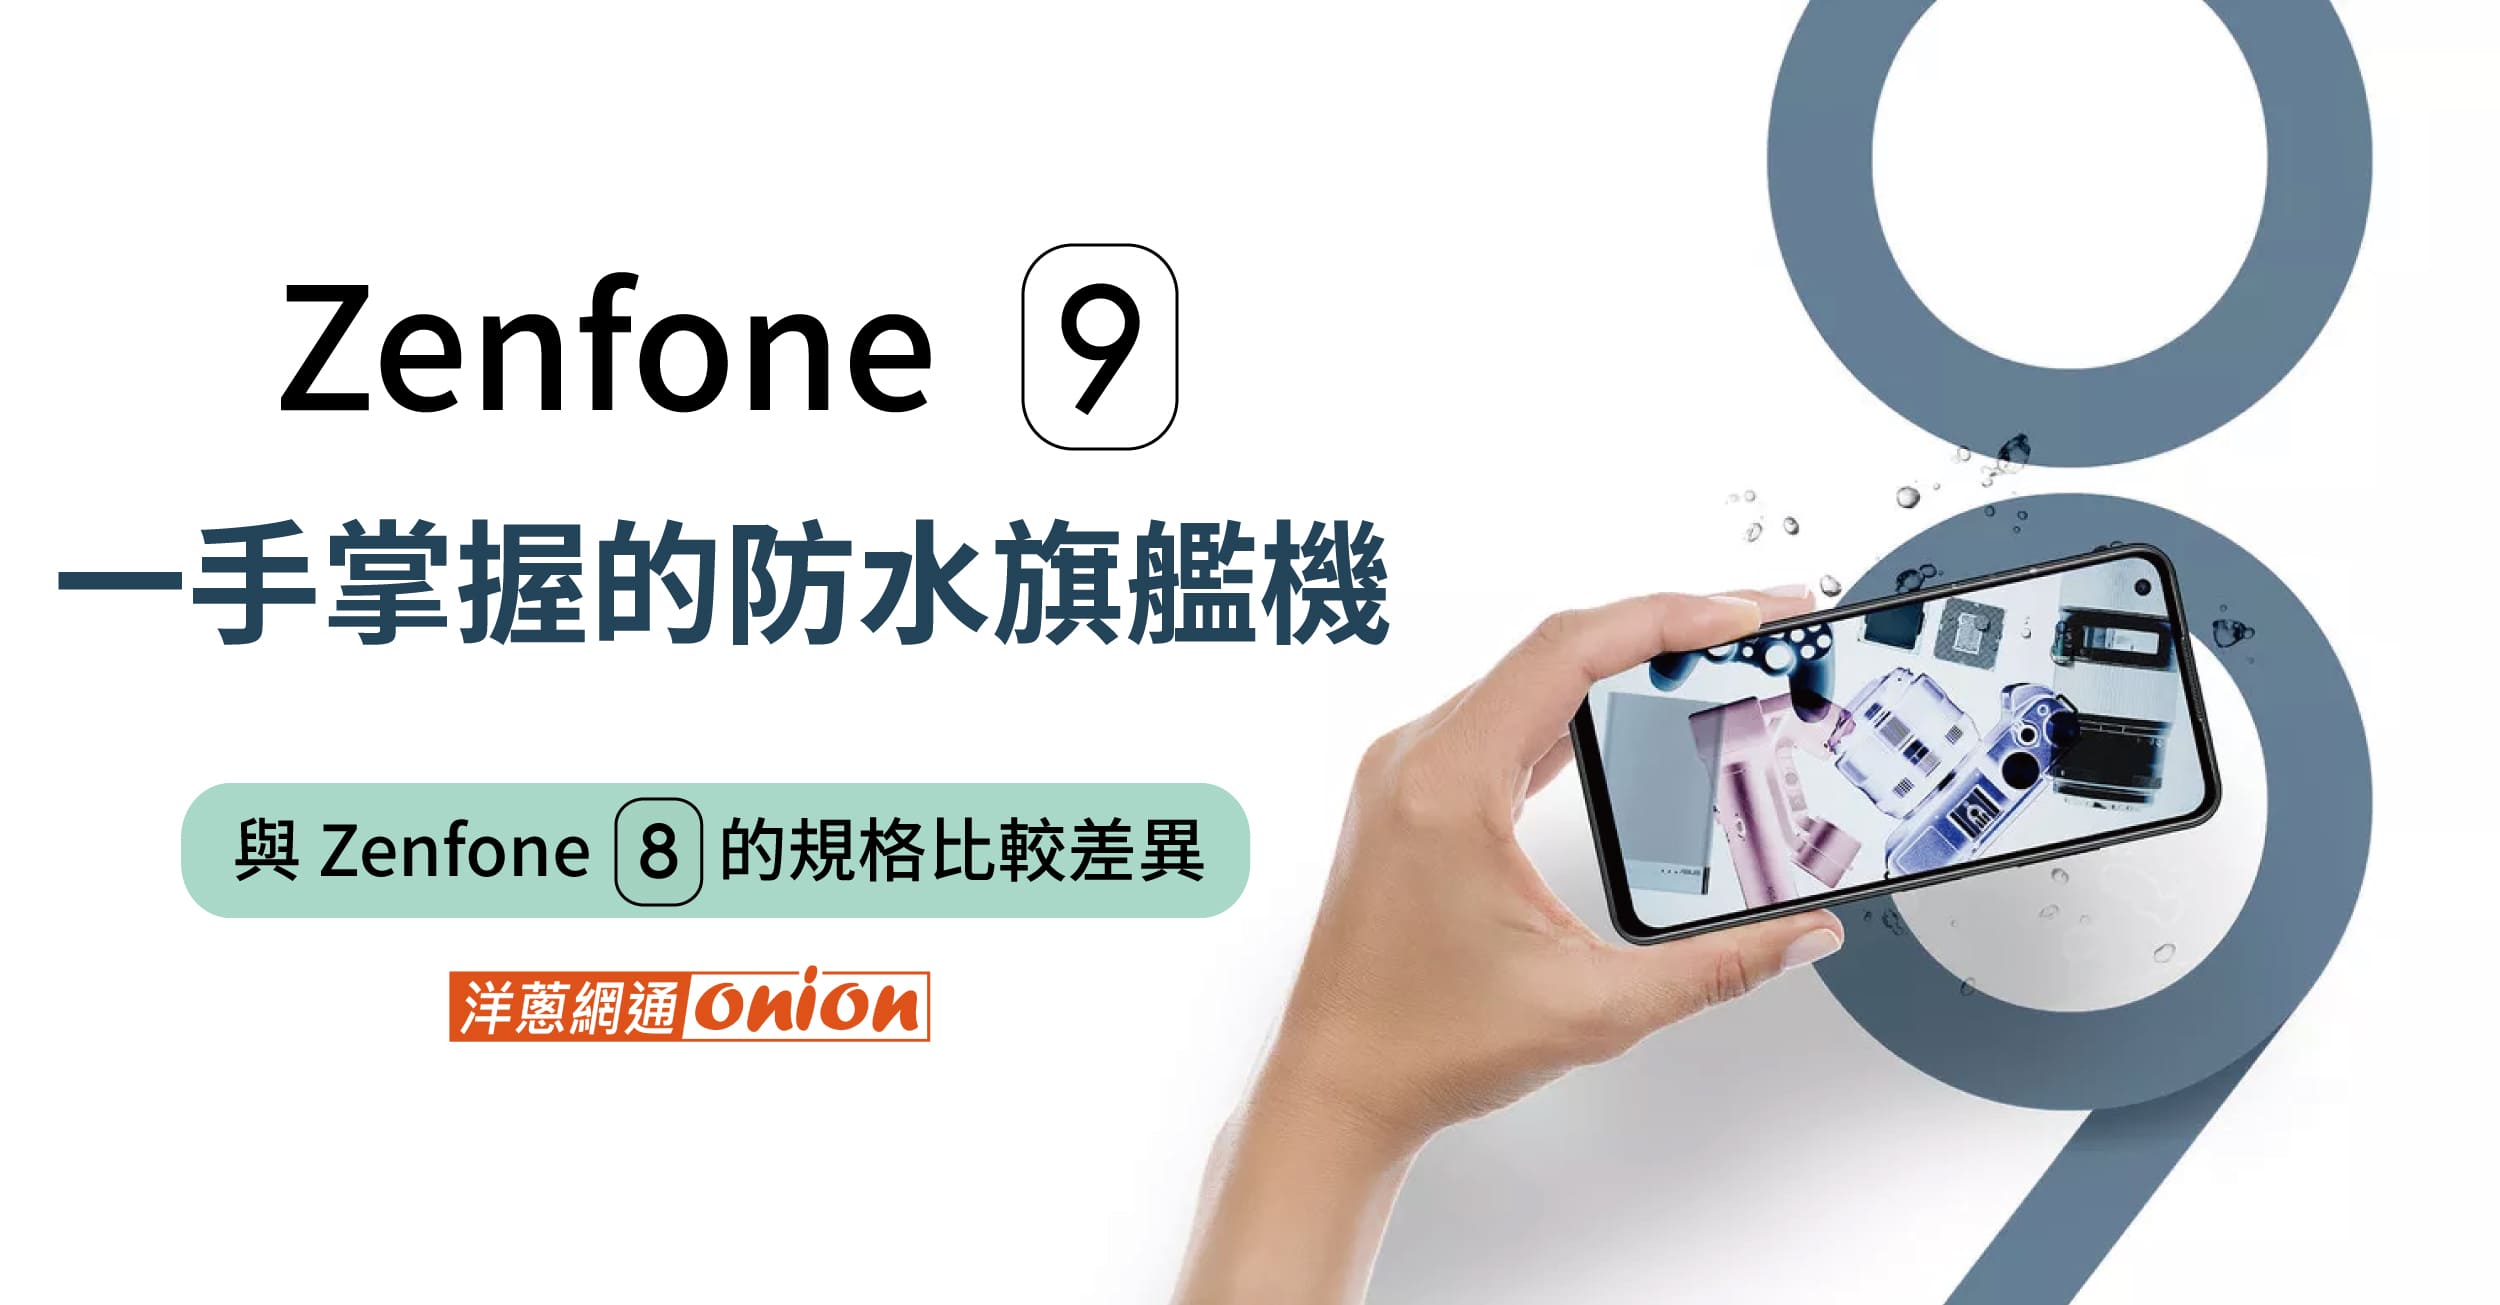 【ASUS Zenfone 9】規格、外觀全曝光，與Zenfone8的差異比較